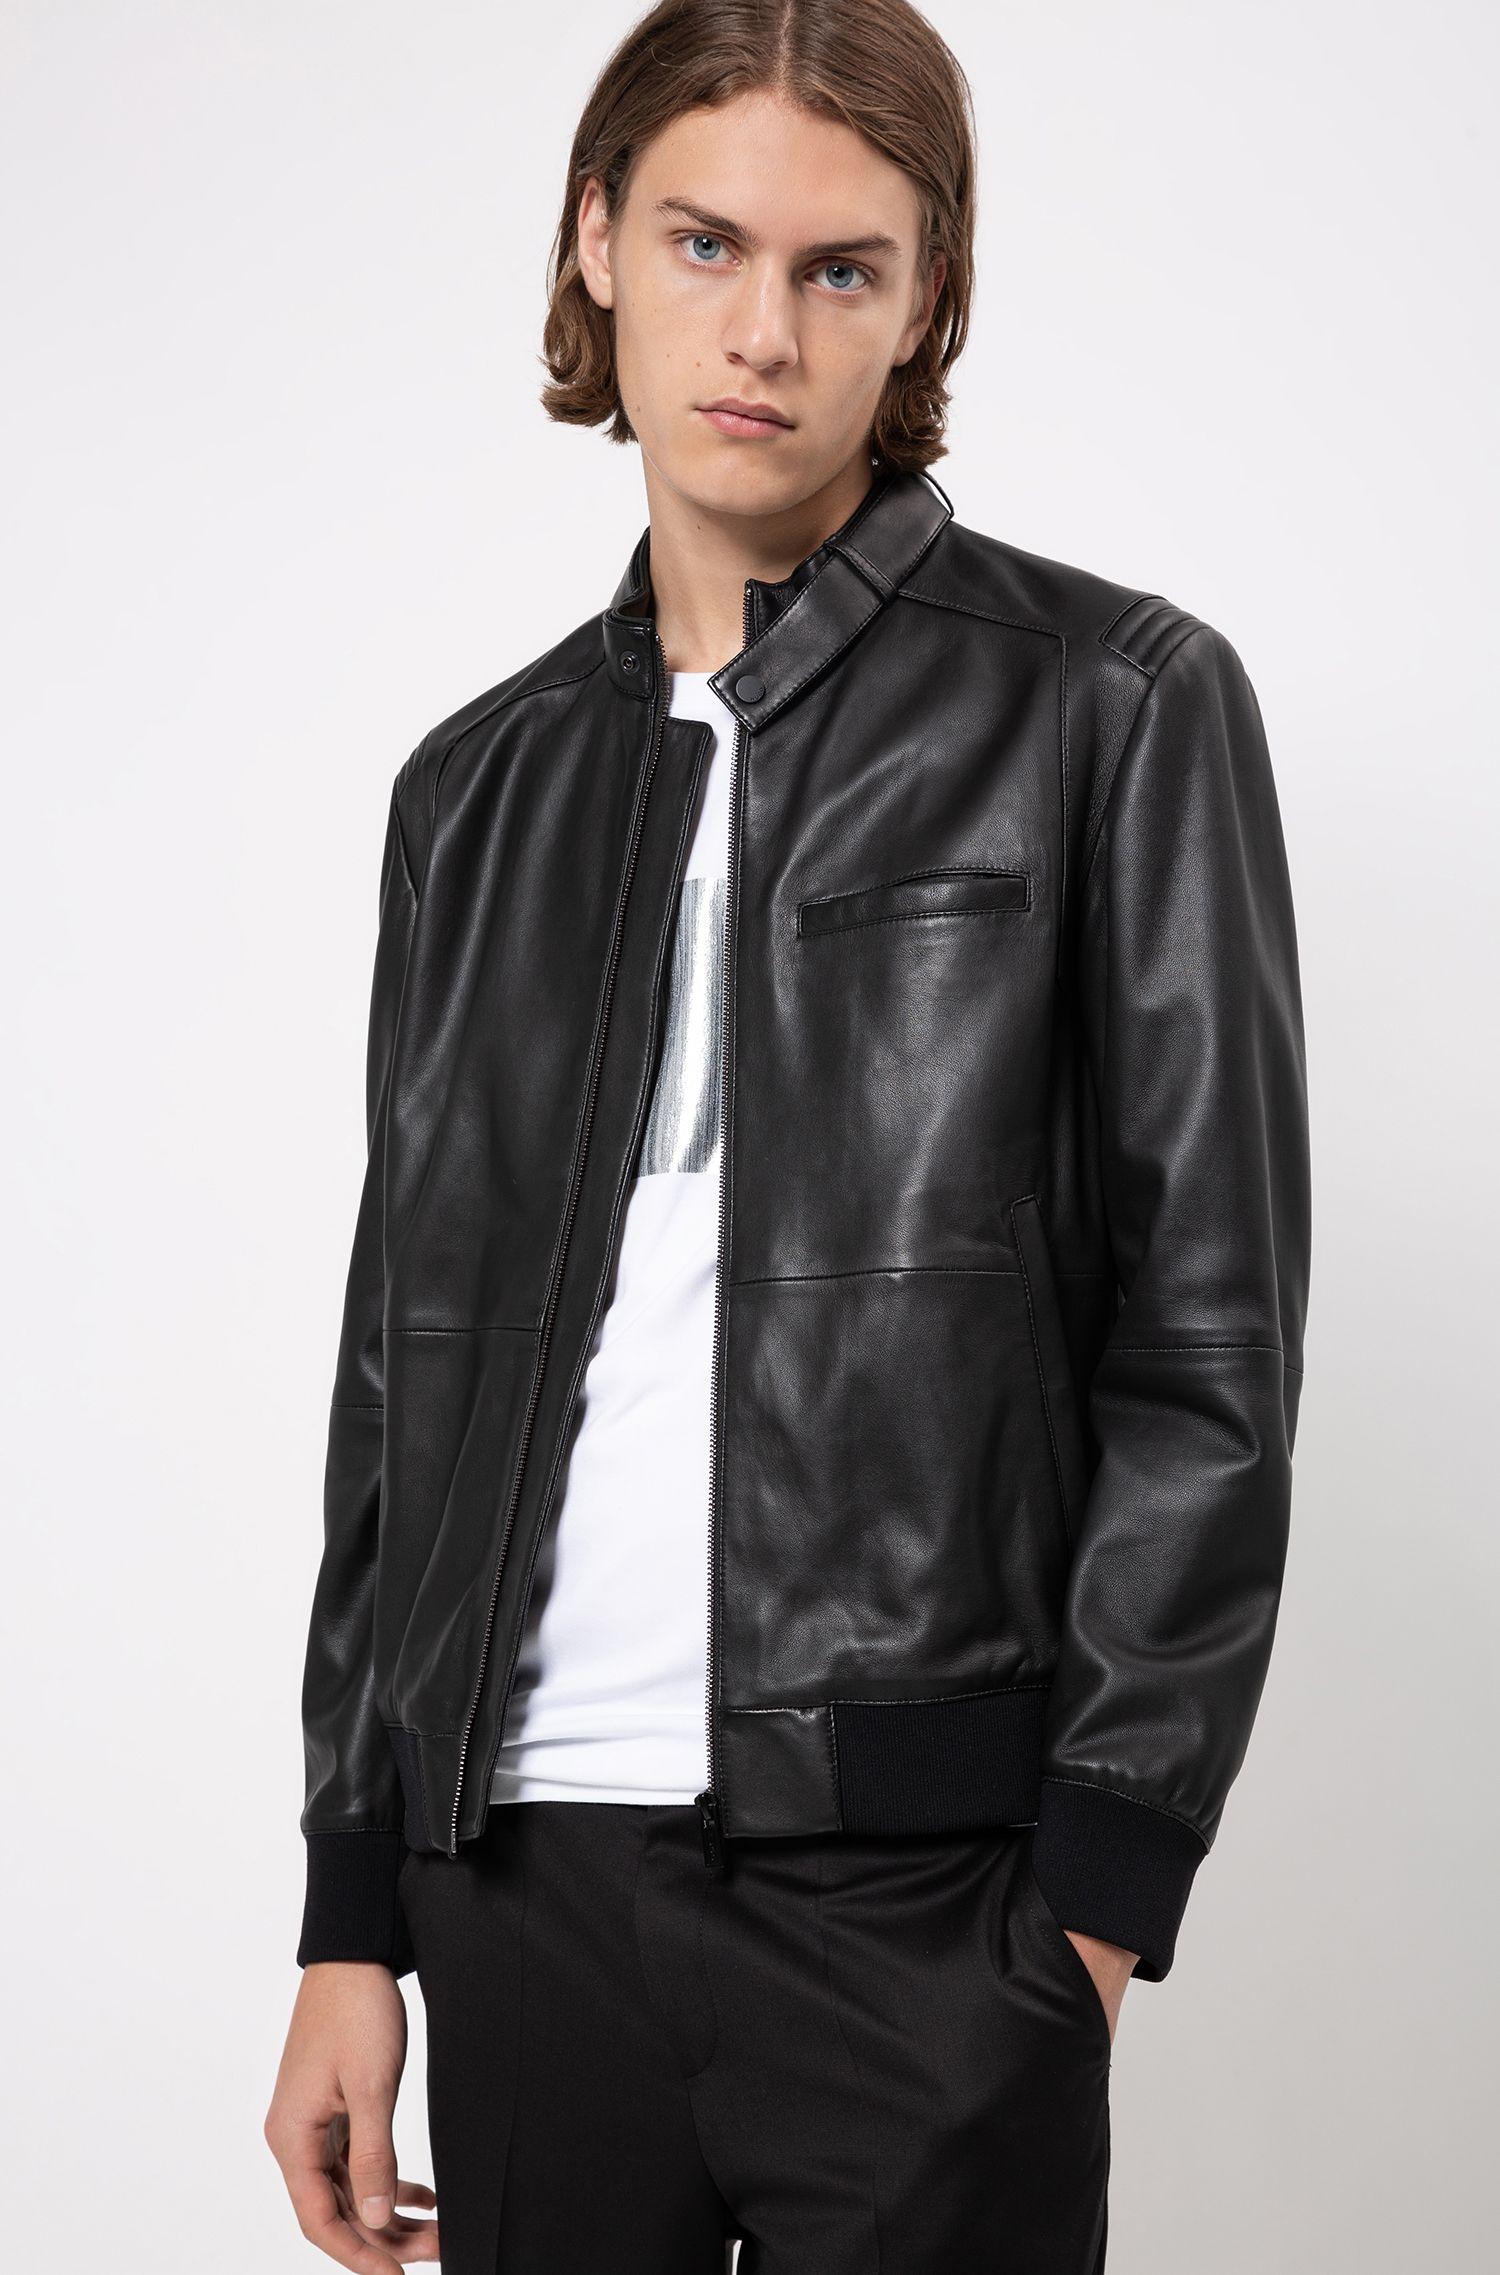 HUGO Slim Fit Biker Jacket In Nappa Leather in Black for Men - Lyst